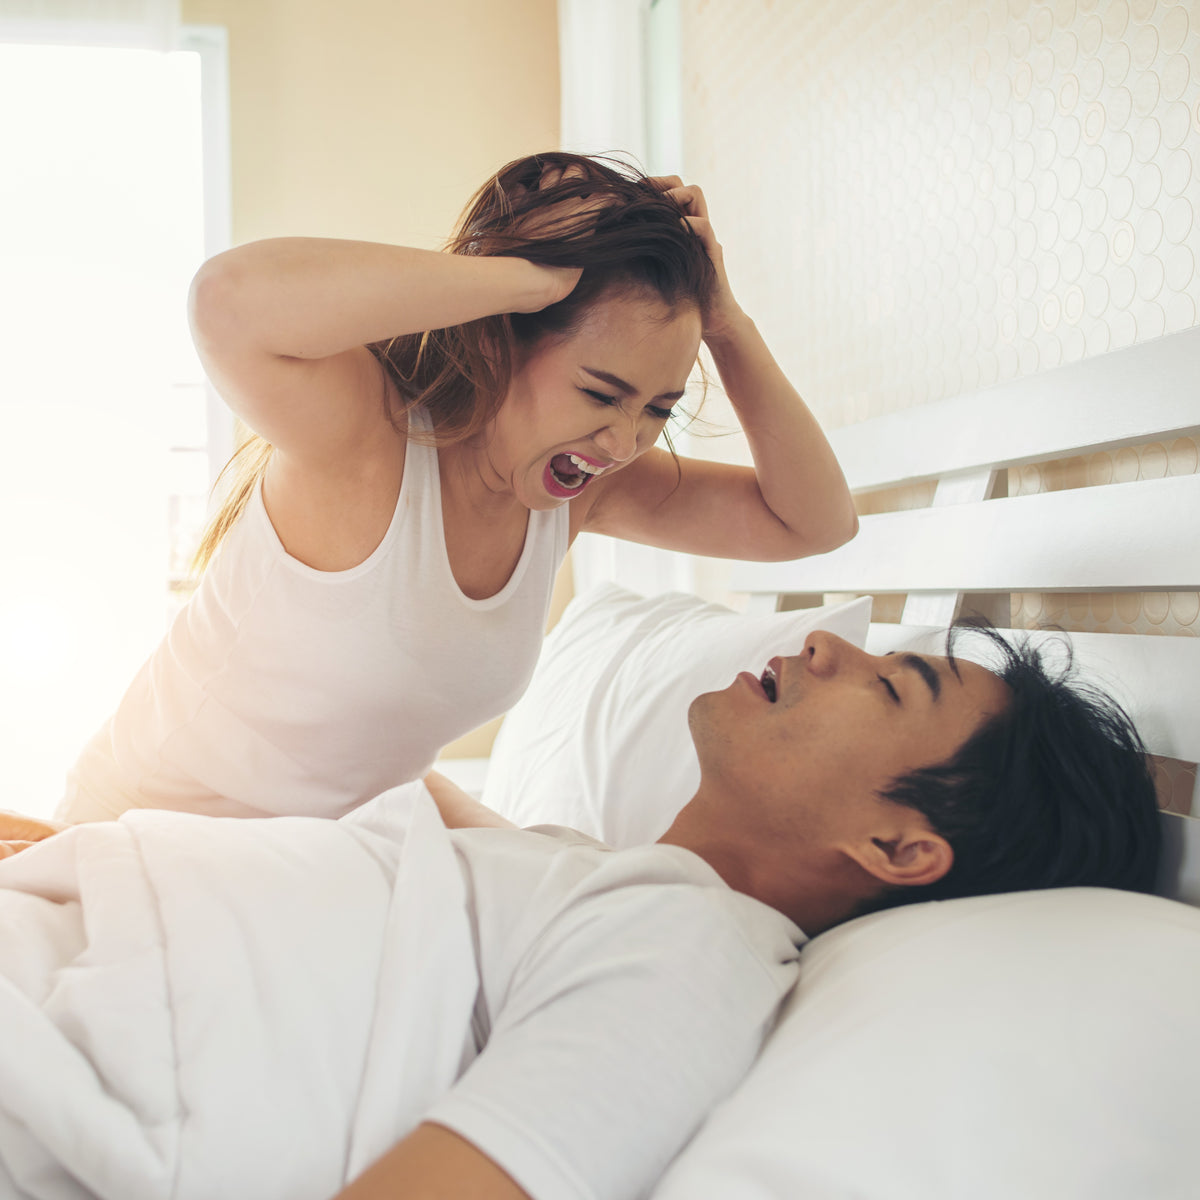 A woman screaming at a sleeping man who’s snoring